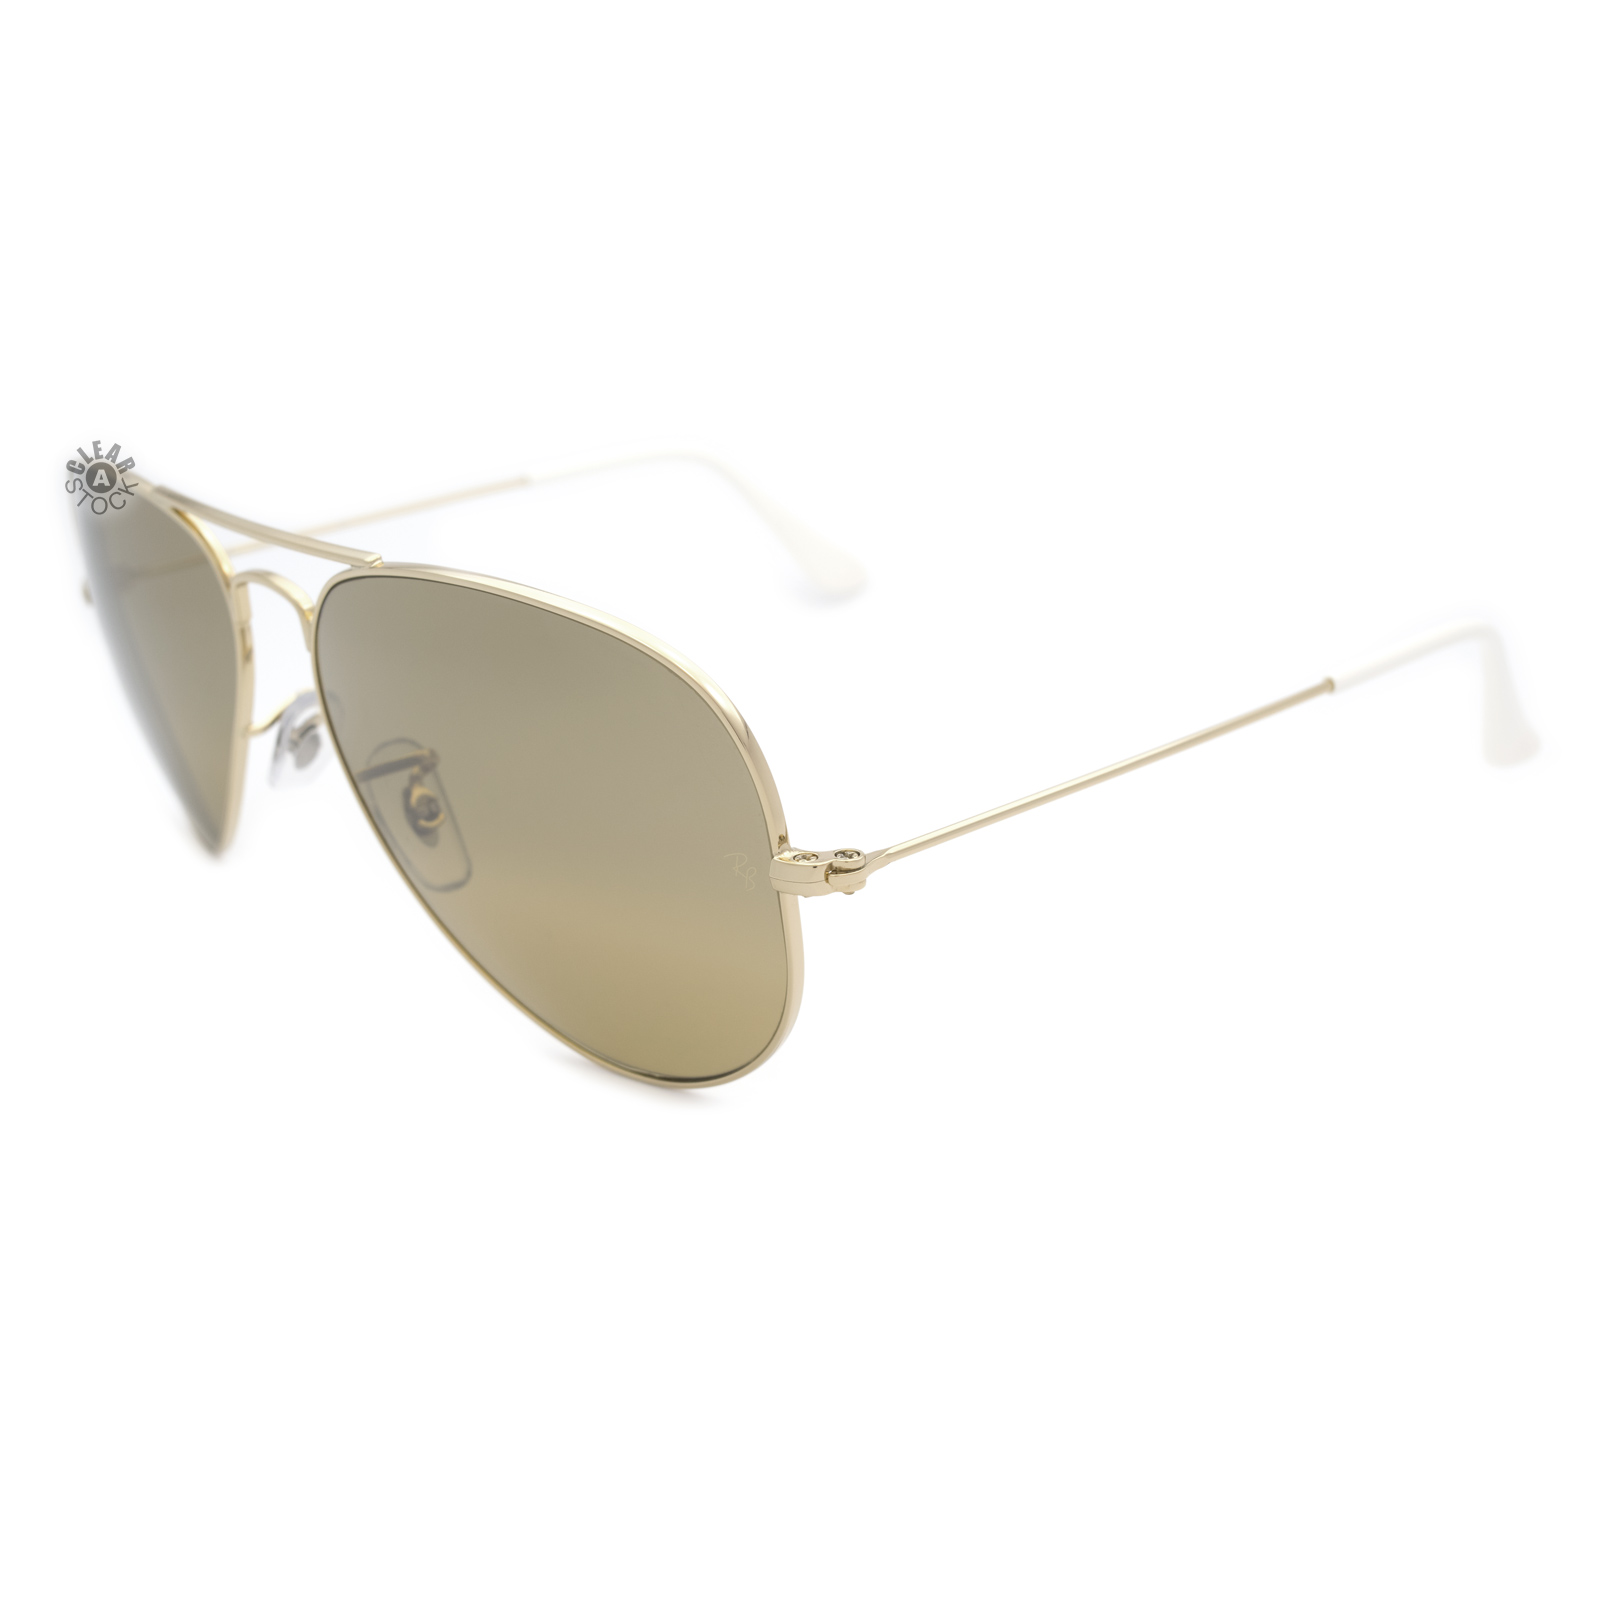 Takt Et hundrede år Mystisk Ray-Ban RB3025 001/3K Aviator Sunglasses Gold/Brown-Silver Mirror 58mm